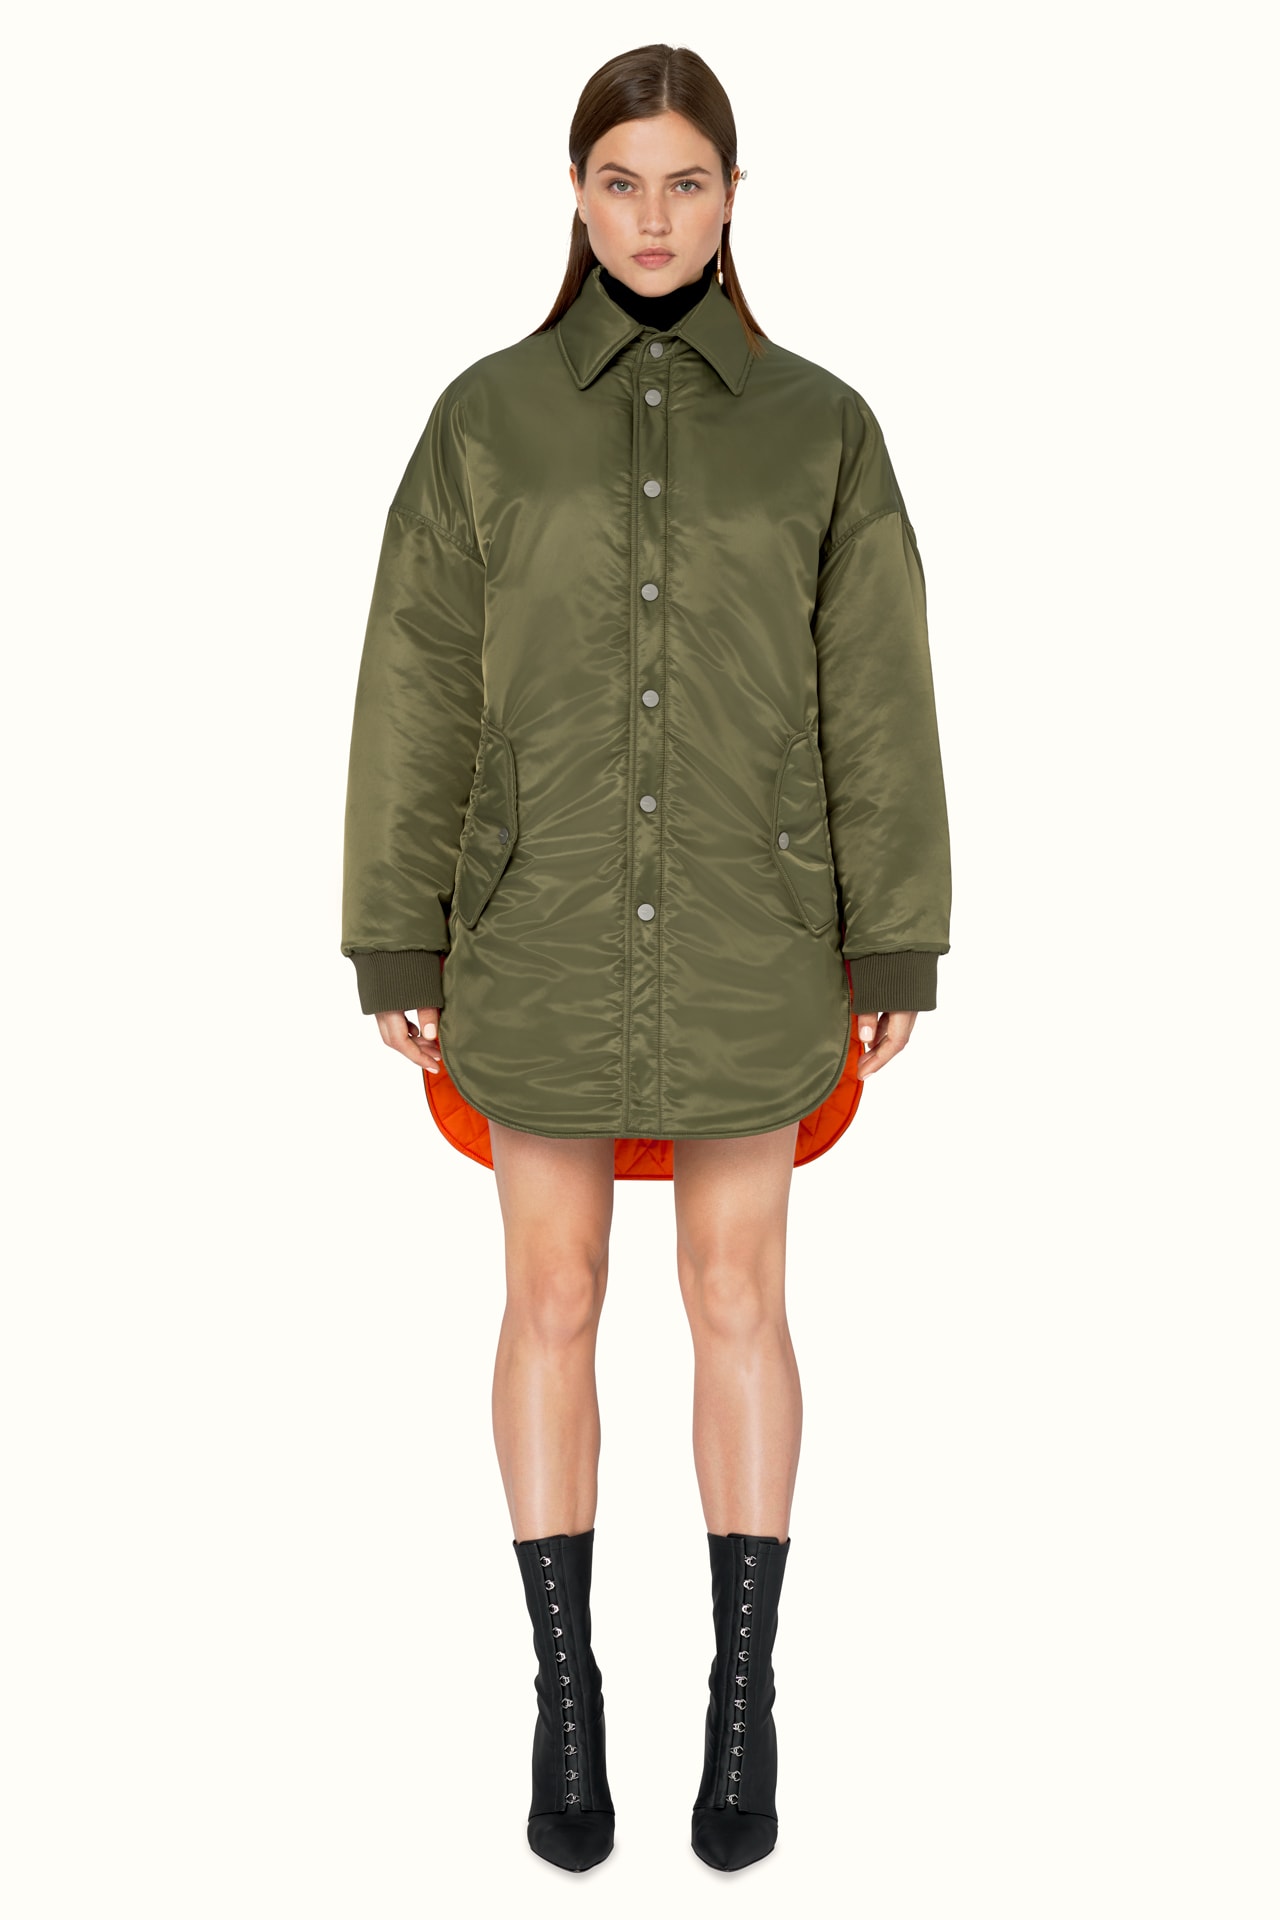 FENTY Rihanna Release 9-19 Collection Lookbook Jacket Green